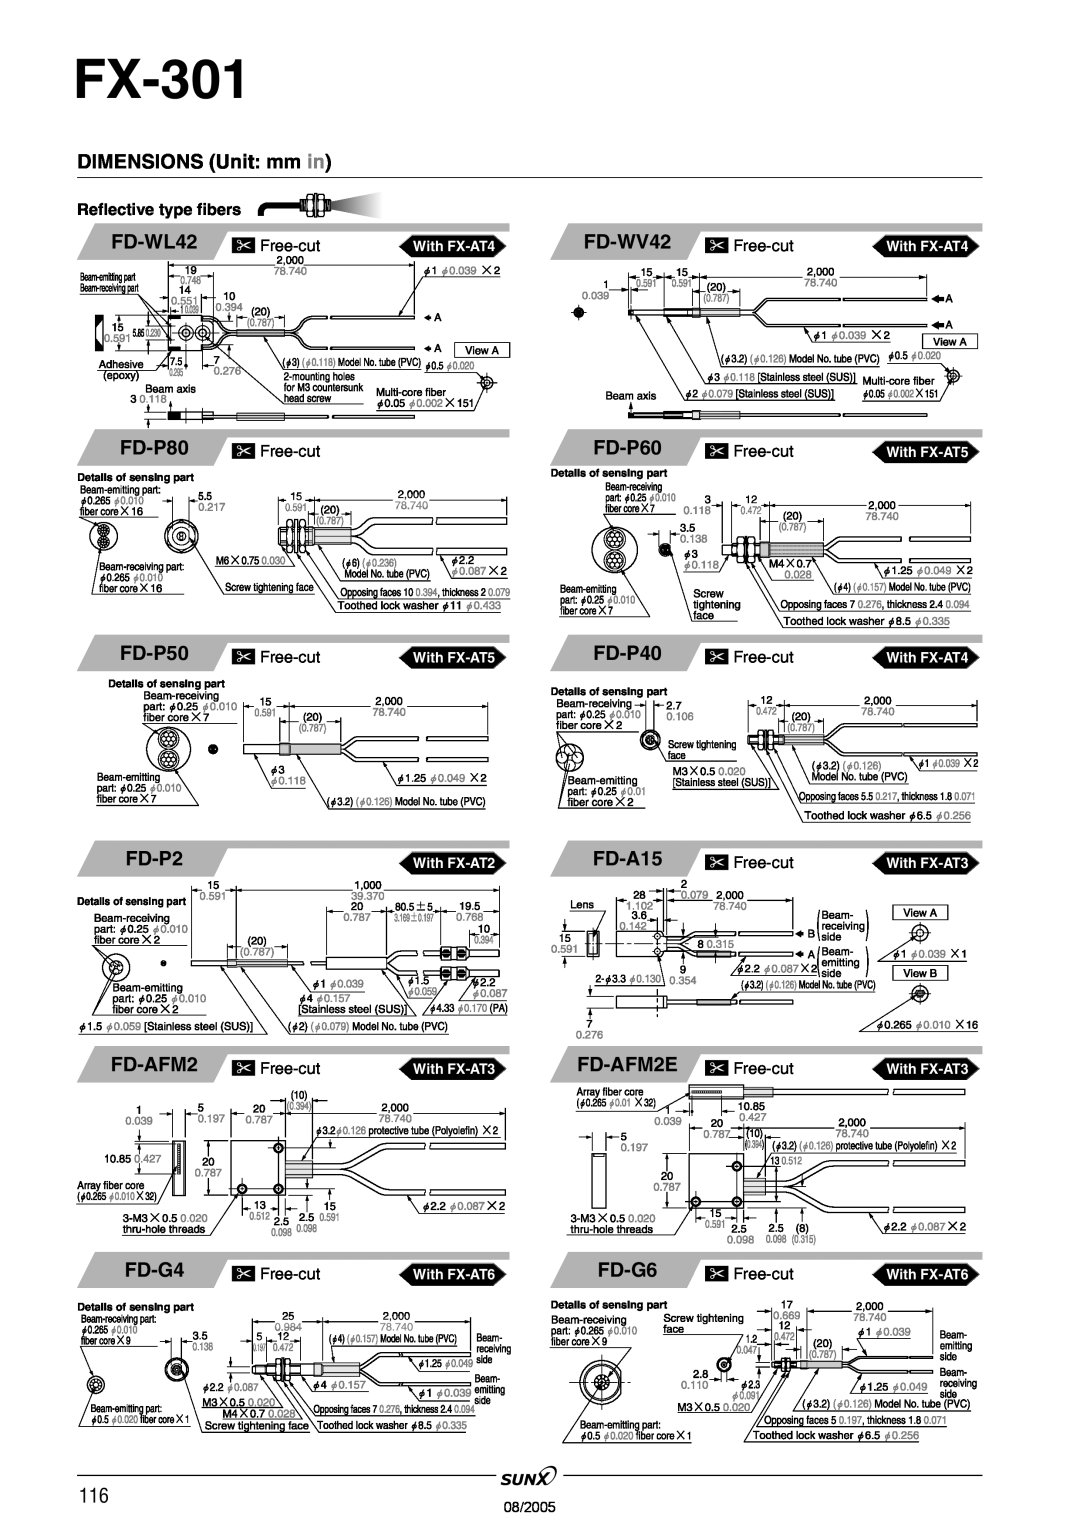 Panasonic FX-301 manual FD-WL42, FD-WV42, FD-P50, FD-P40, FD-A15, FD-AFM2E, FD-G4, FD-G6, FD-P60, DIMENSIONS Unit mm in 